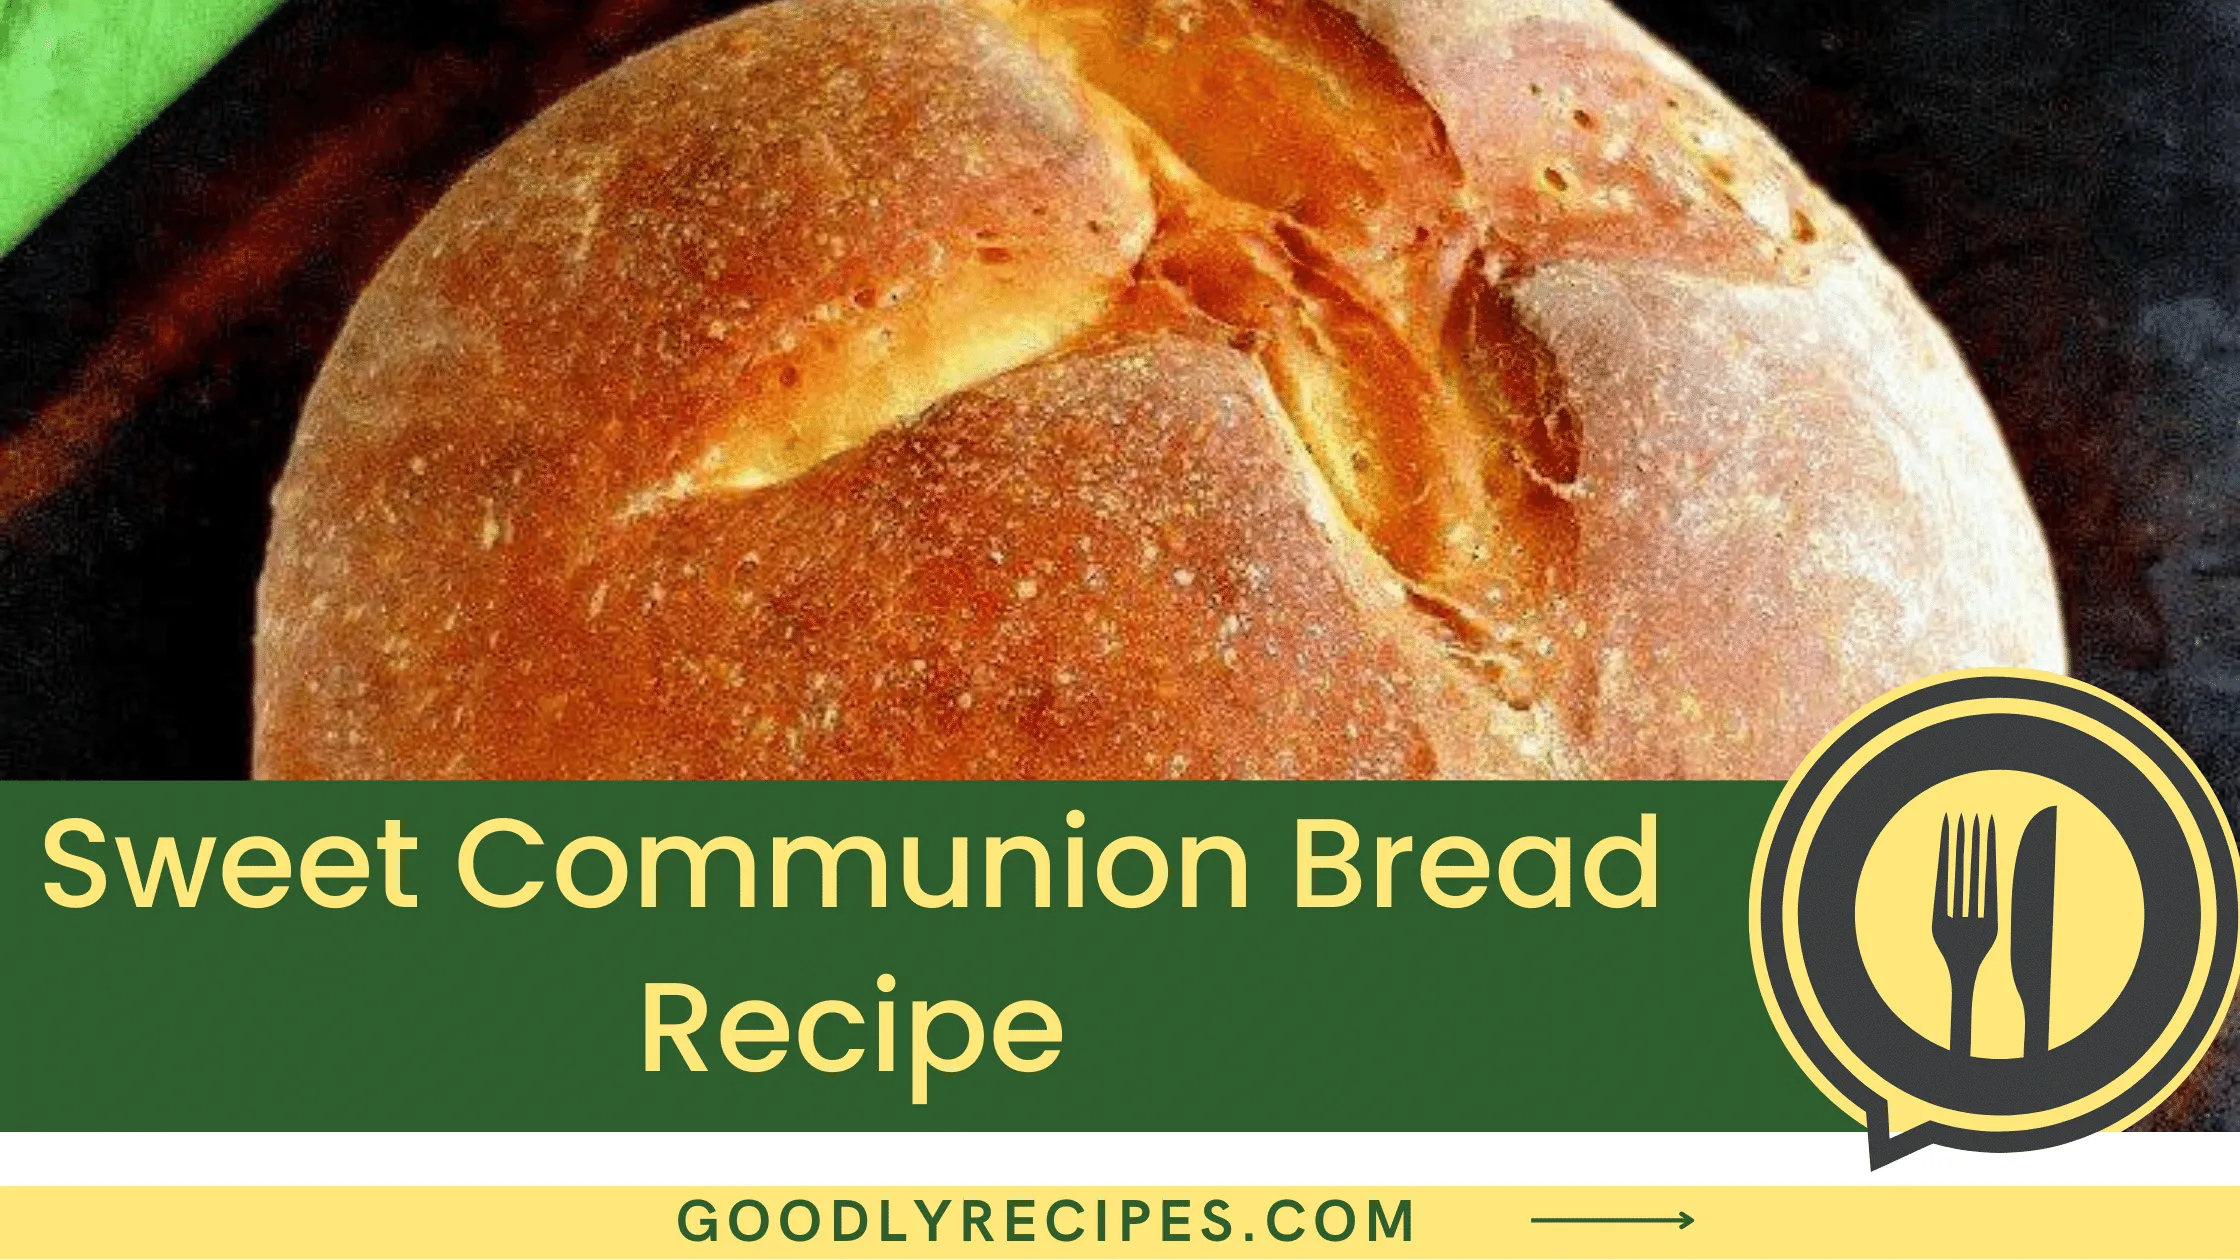 What Is Sweet Communion Bread?